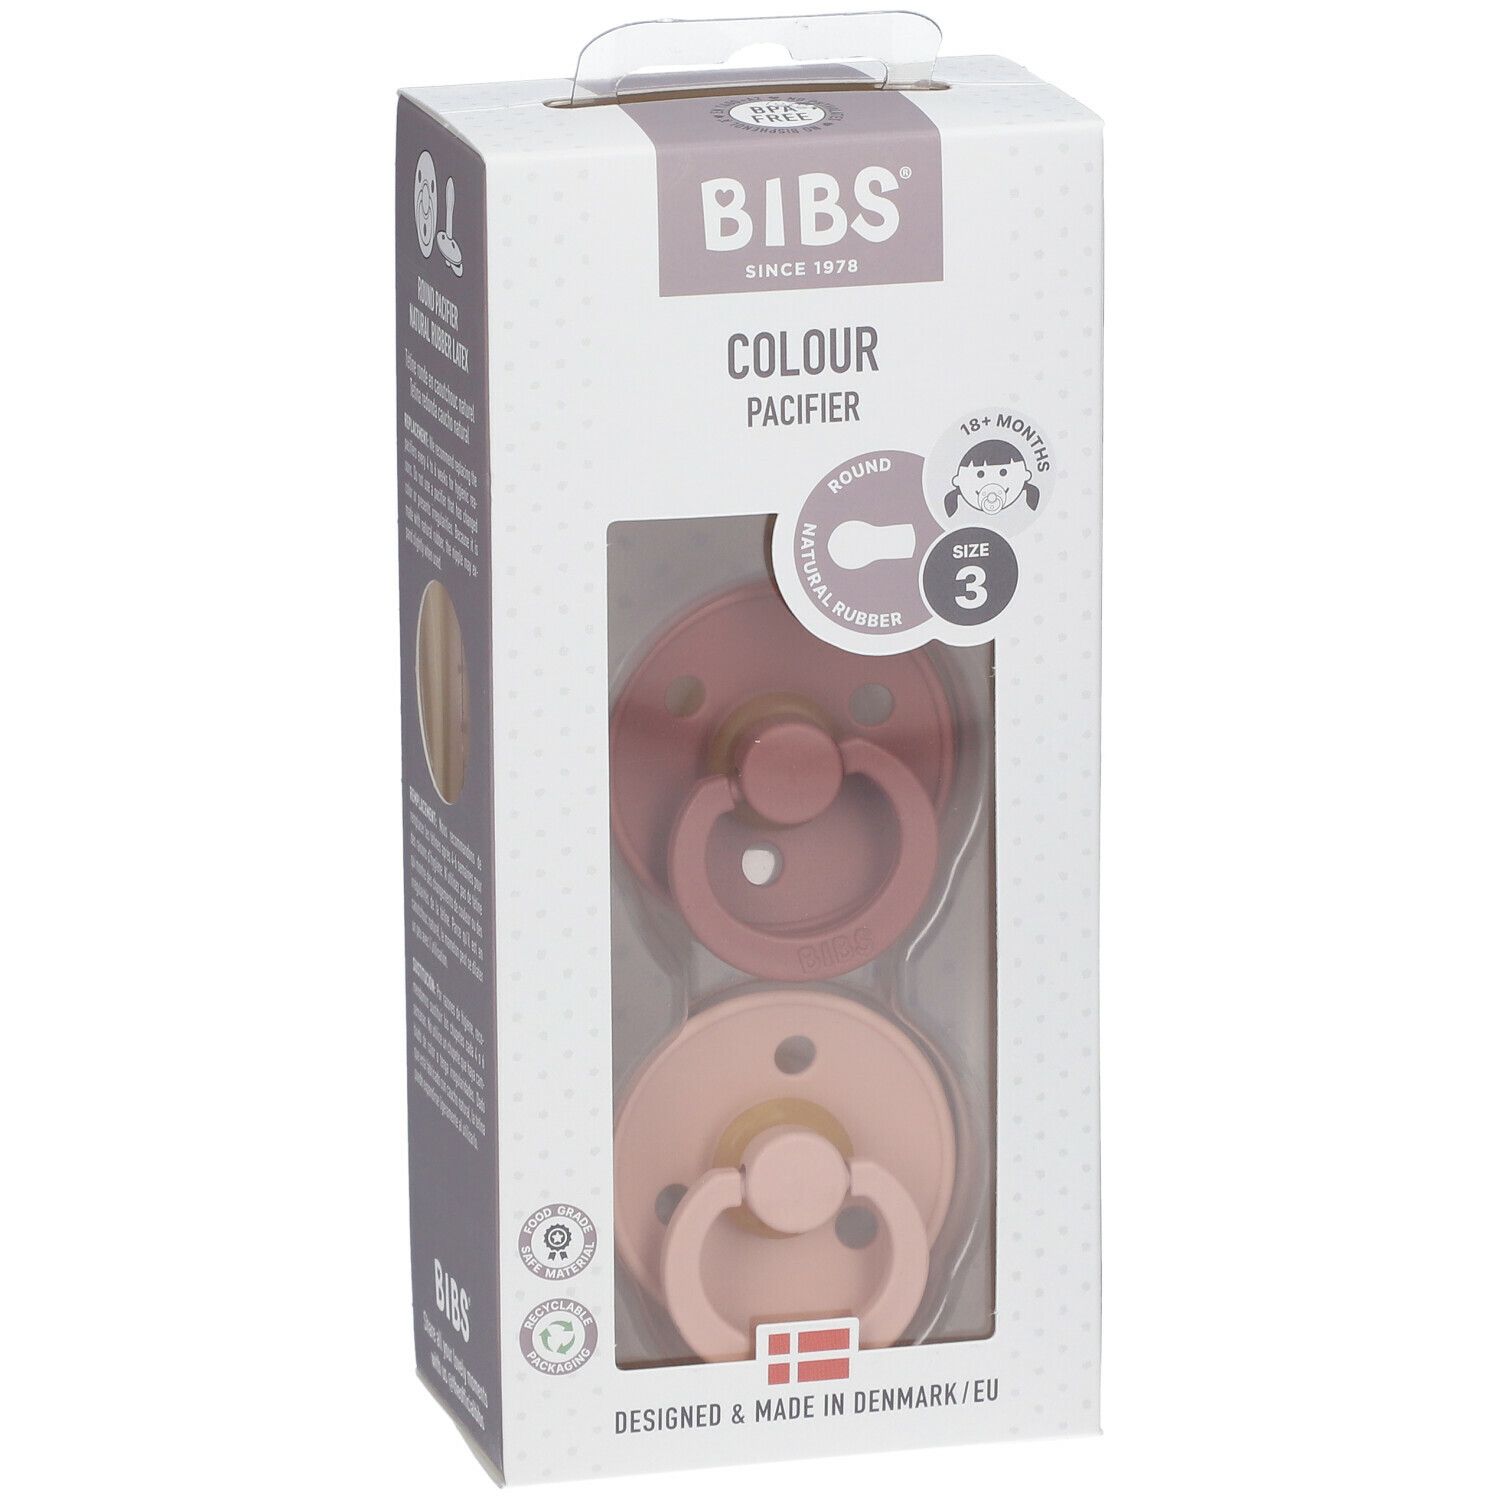 BIBS® BIBS COLOUR Woodchuck - Blush +18 Monate Größe 3